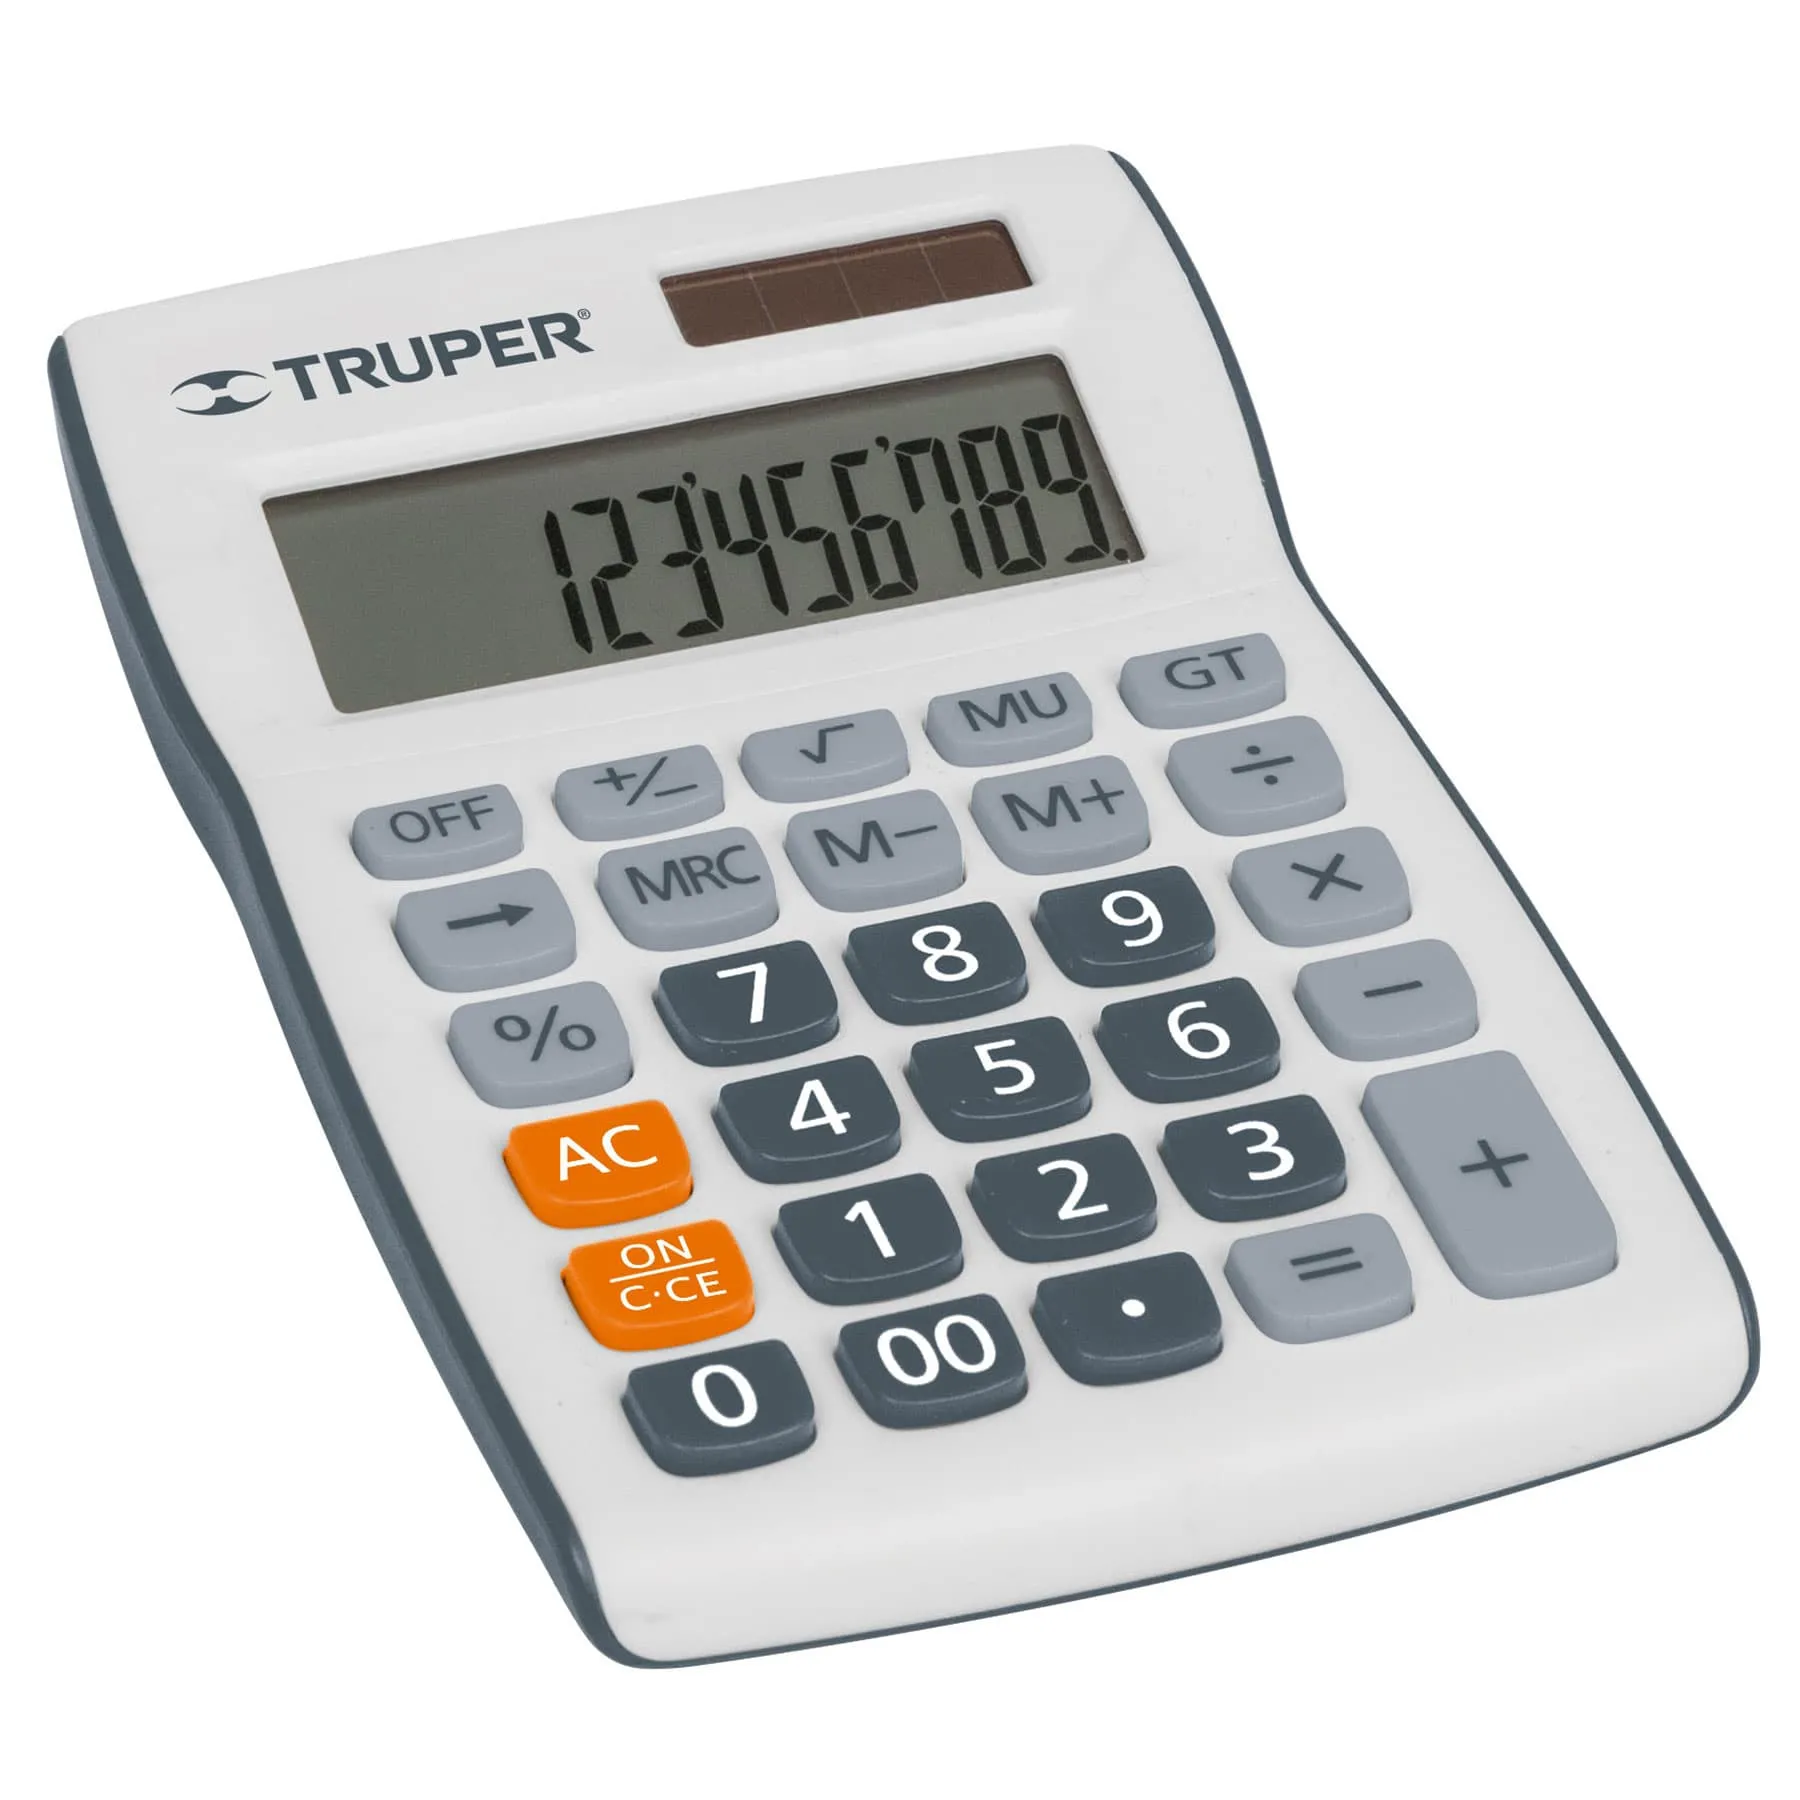 Calculadora De 12 Cm X 8 Cm Para Oficina, Negocio Y Hogar Truper